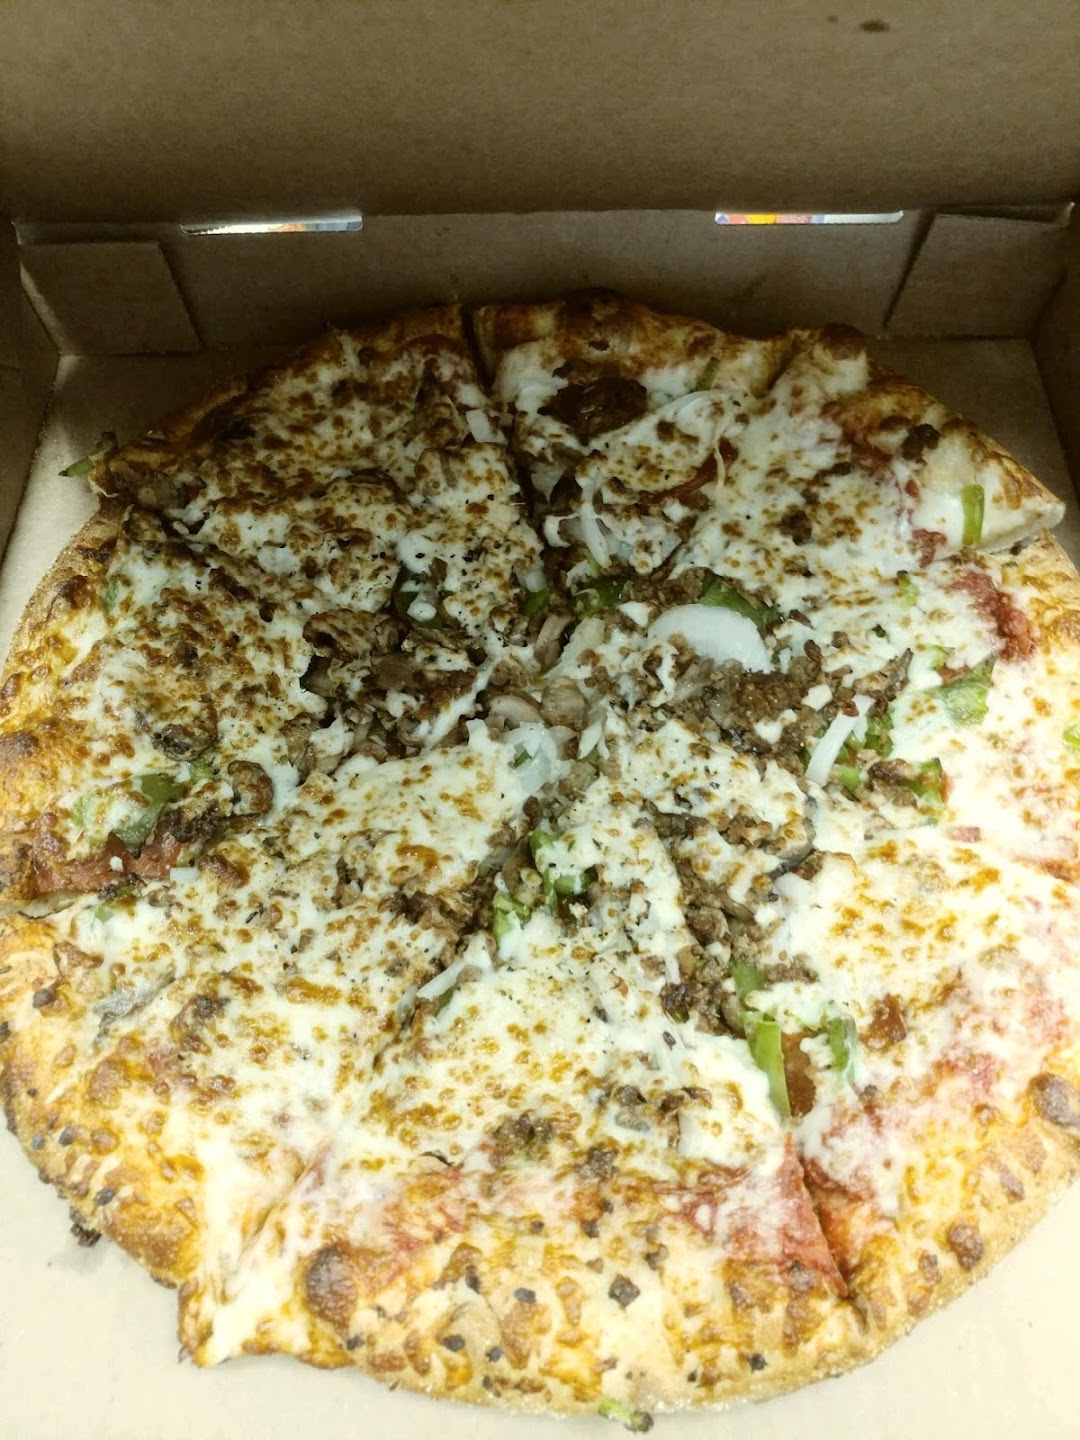 Pizza X